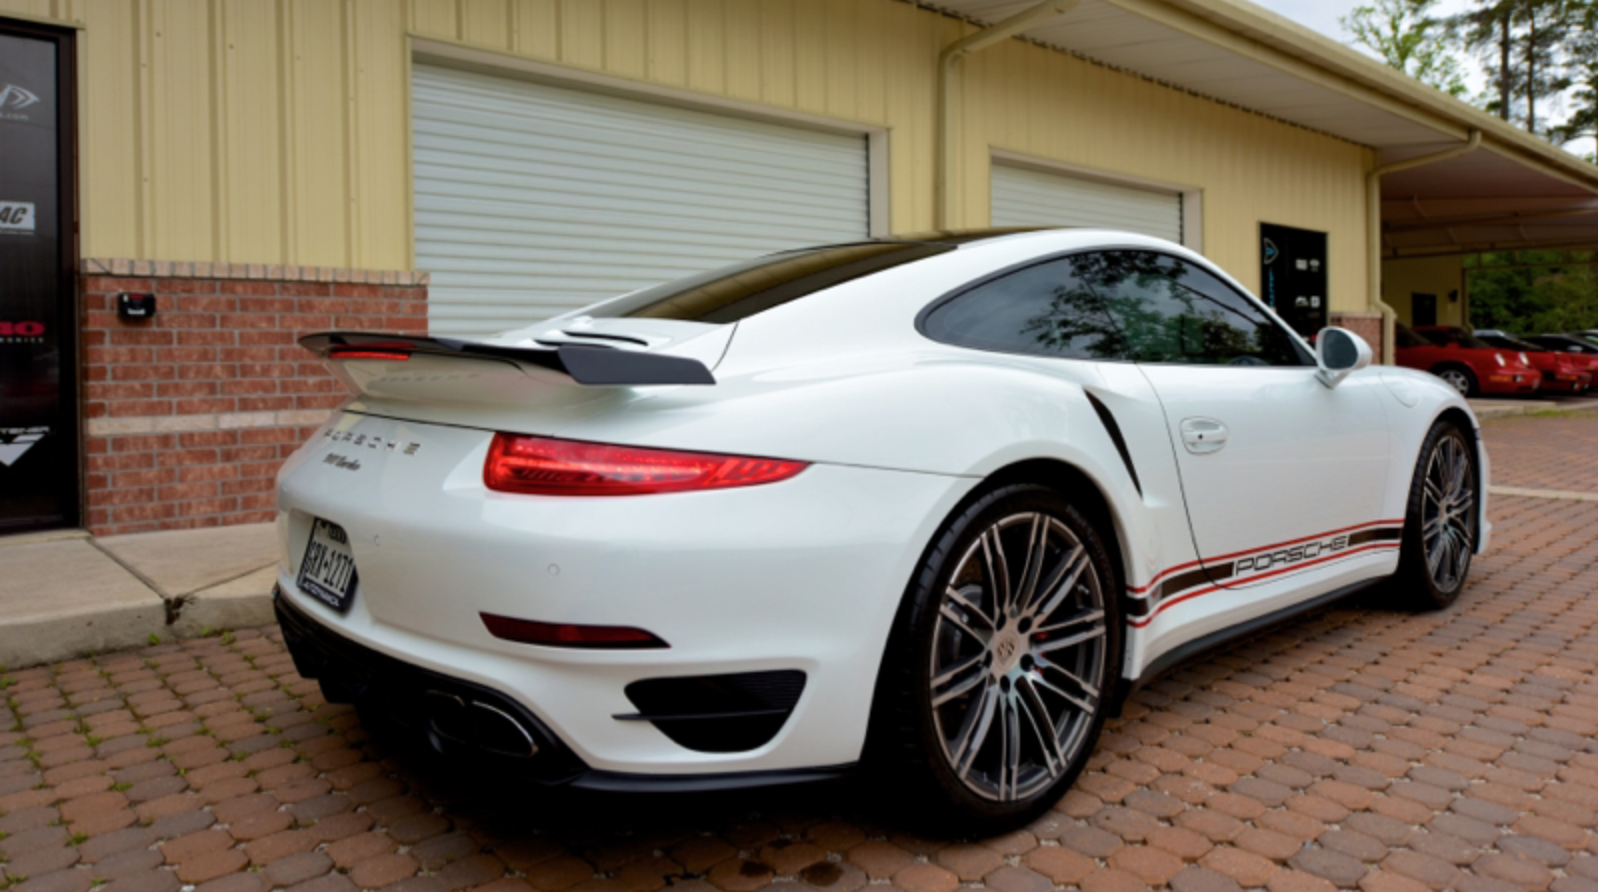 Porsche 911 Turbo Transformed with Moshammer Rear End – Vivid Racing News